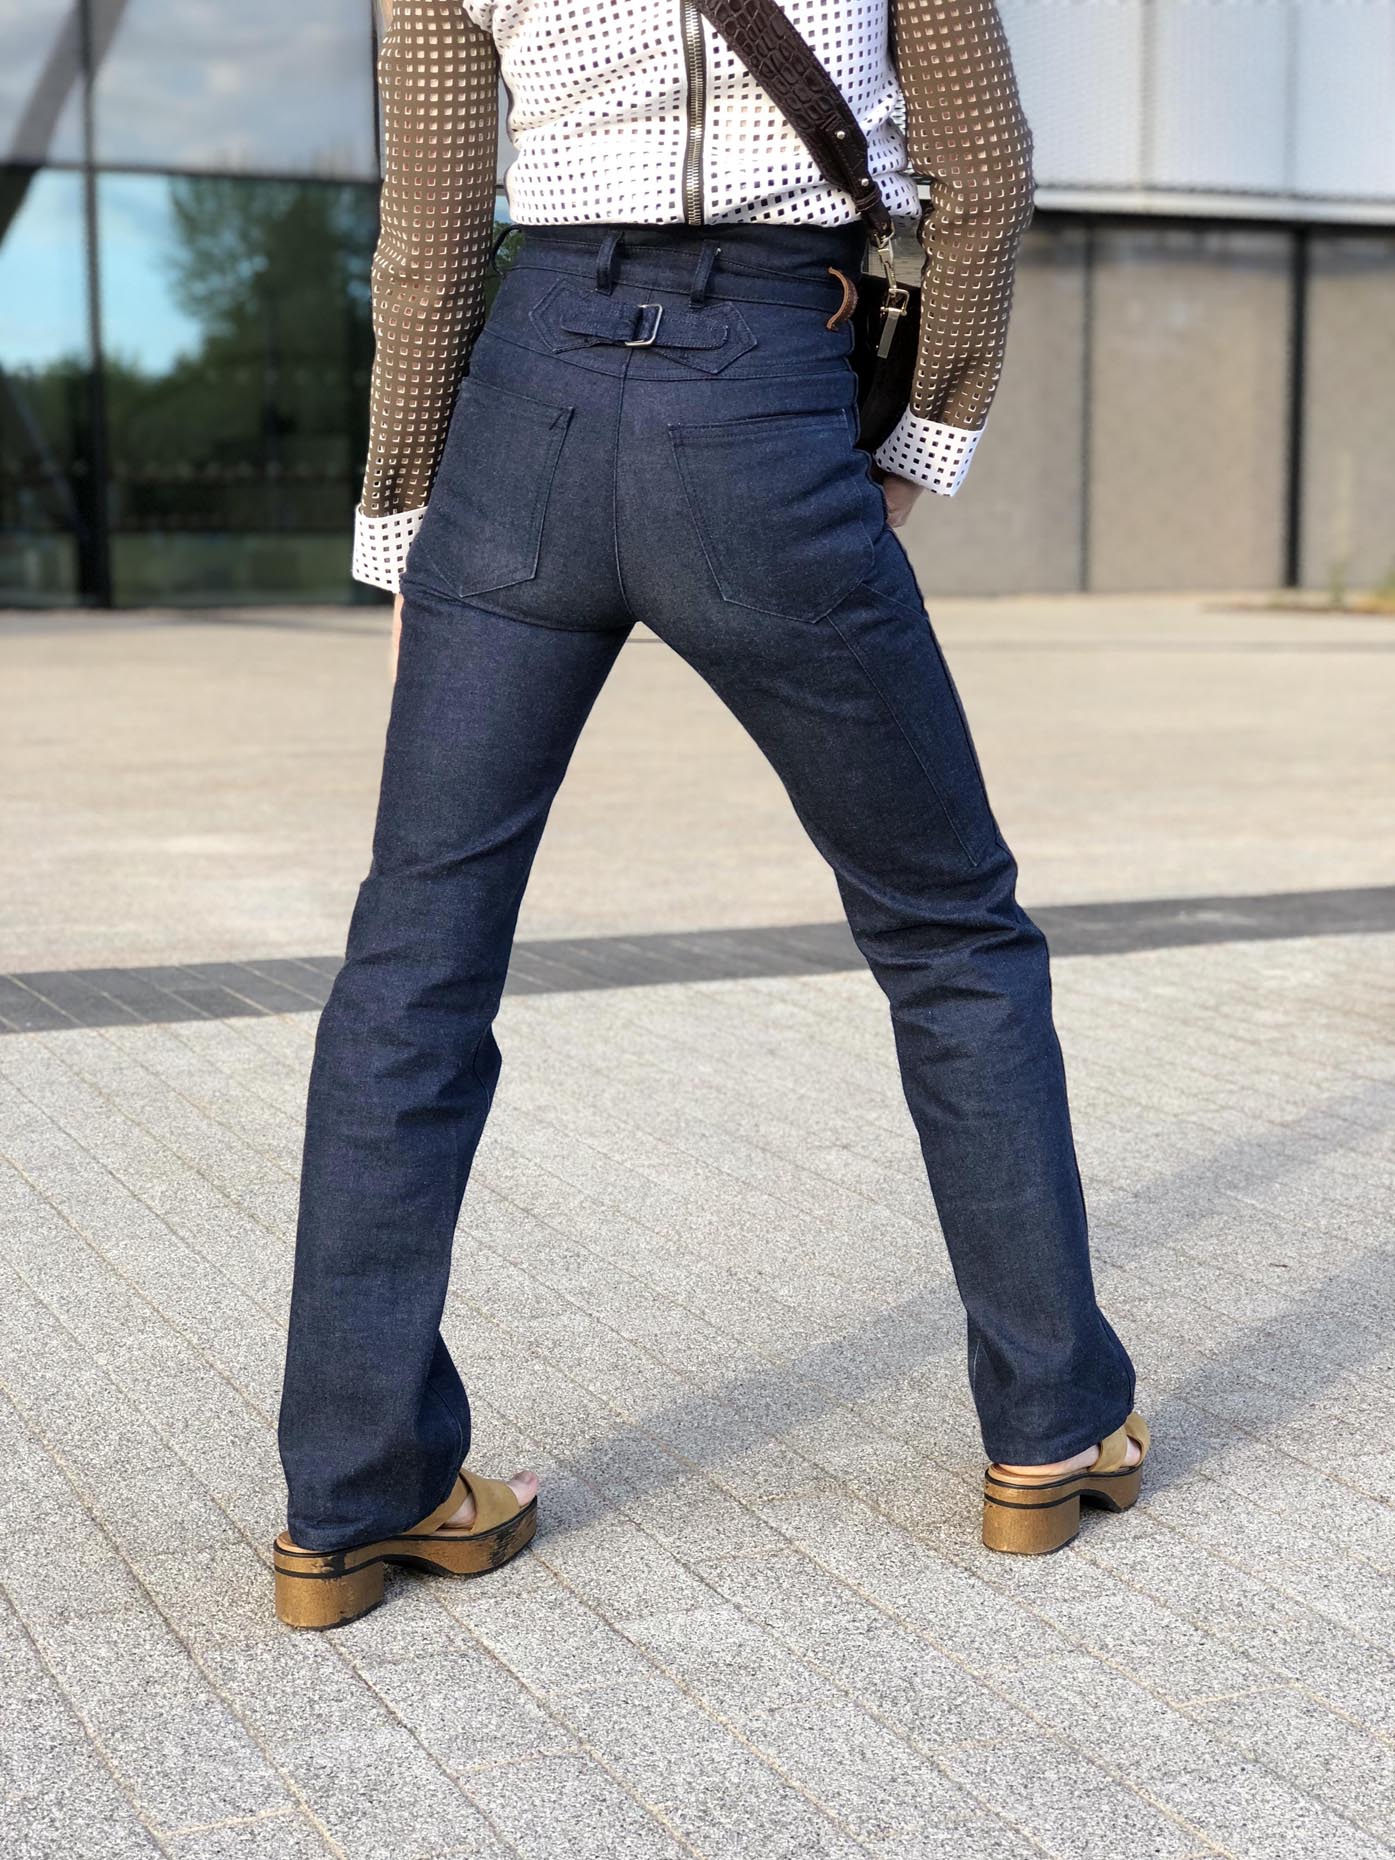 flared acne jeans, jw anderson top, saddle bag zofia chylak, vagabond shoes by Fashion Art Media